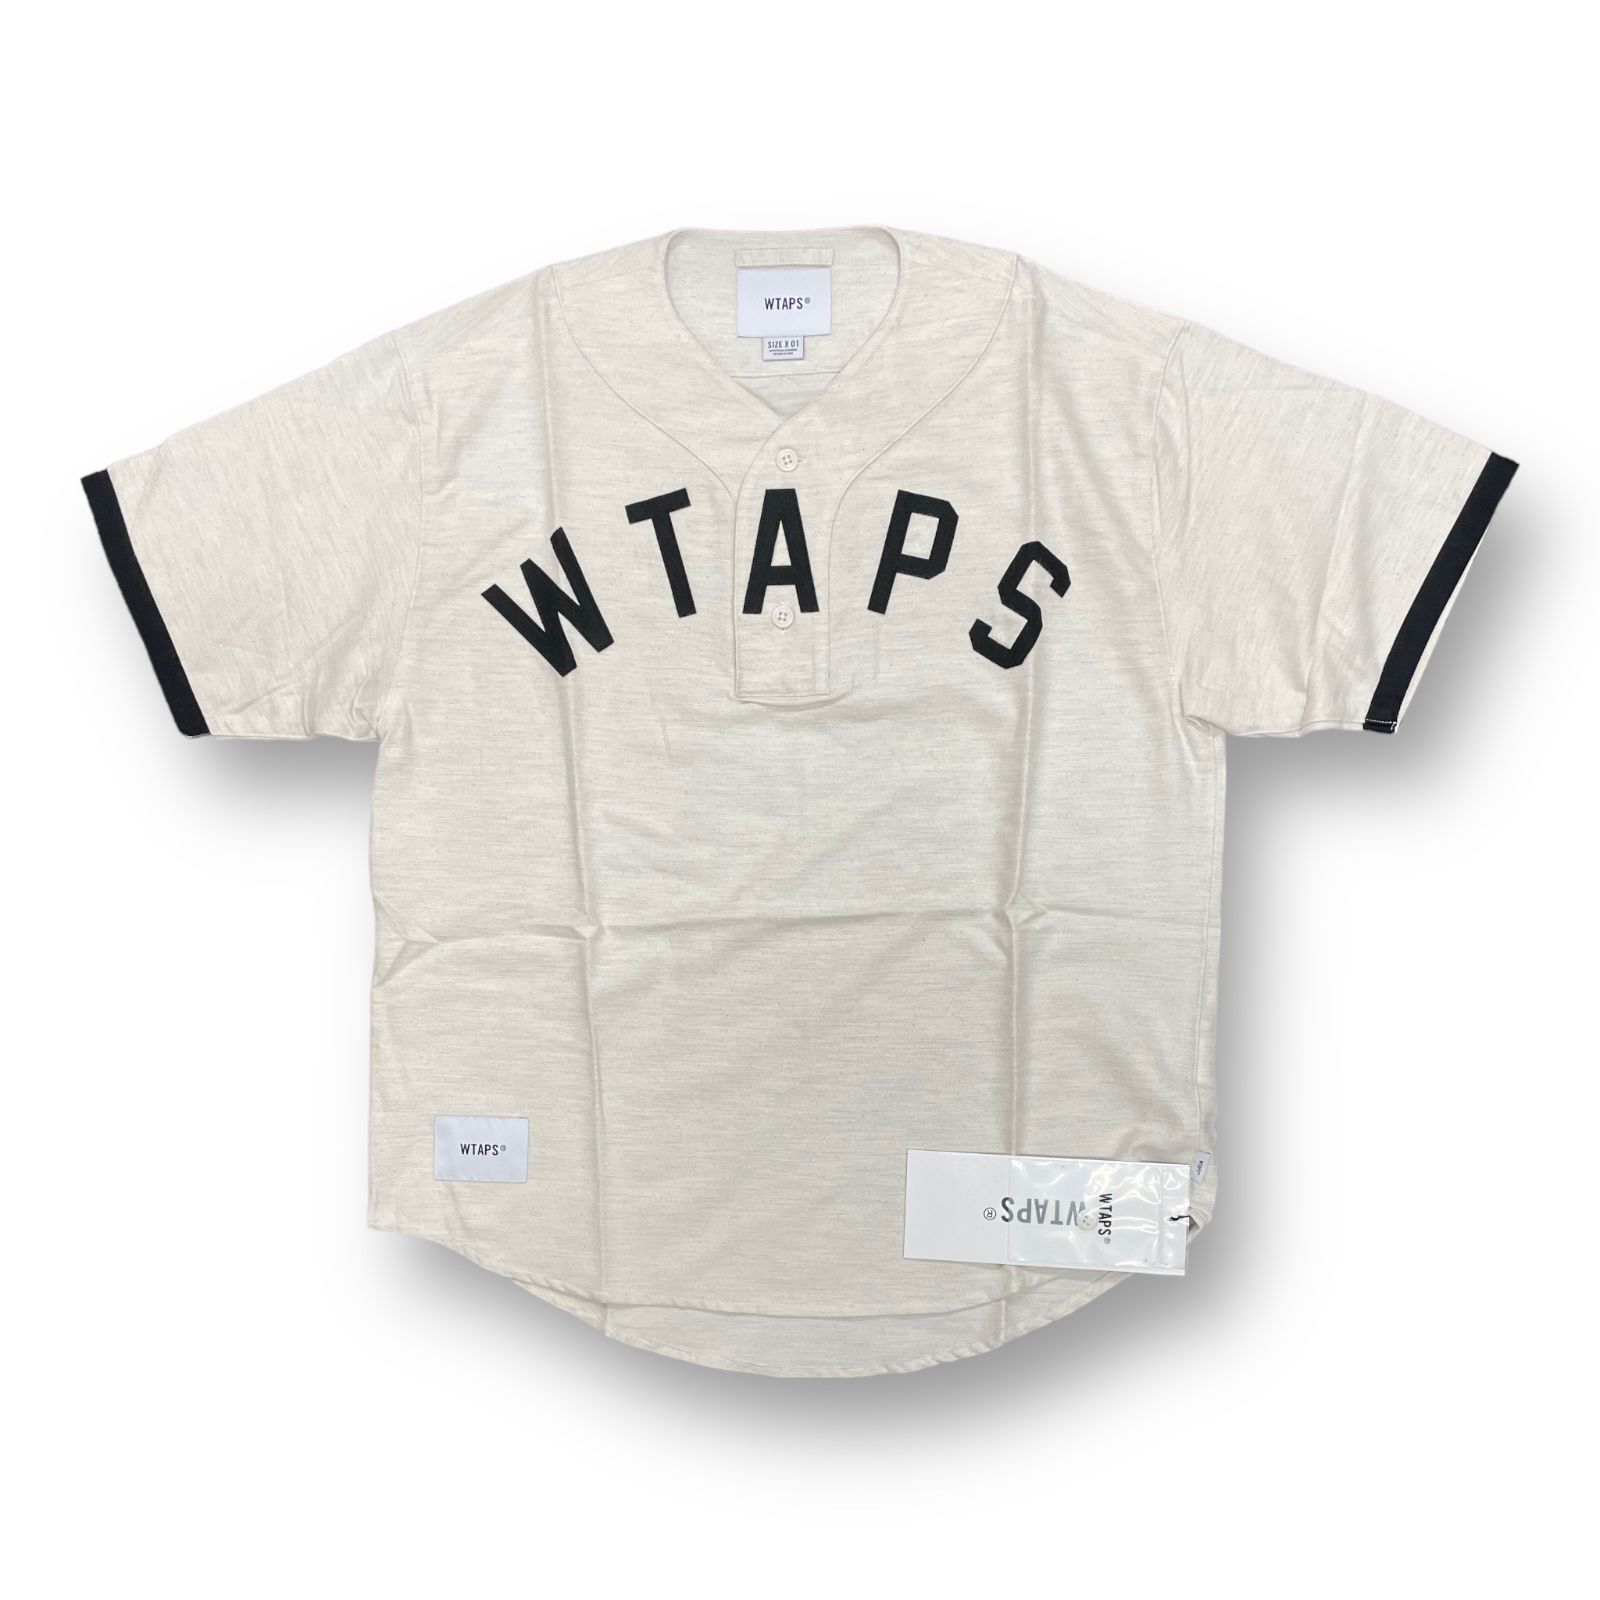 WTAPS 16ss league cotton Lベースボールシャツ - シャツ